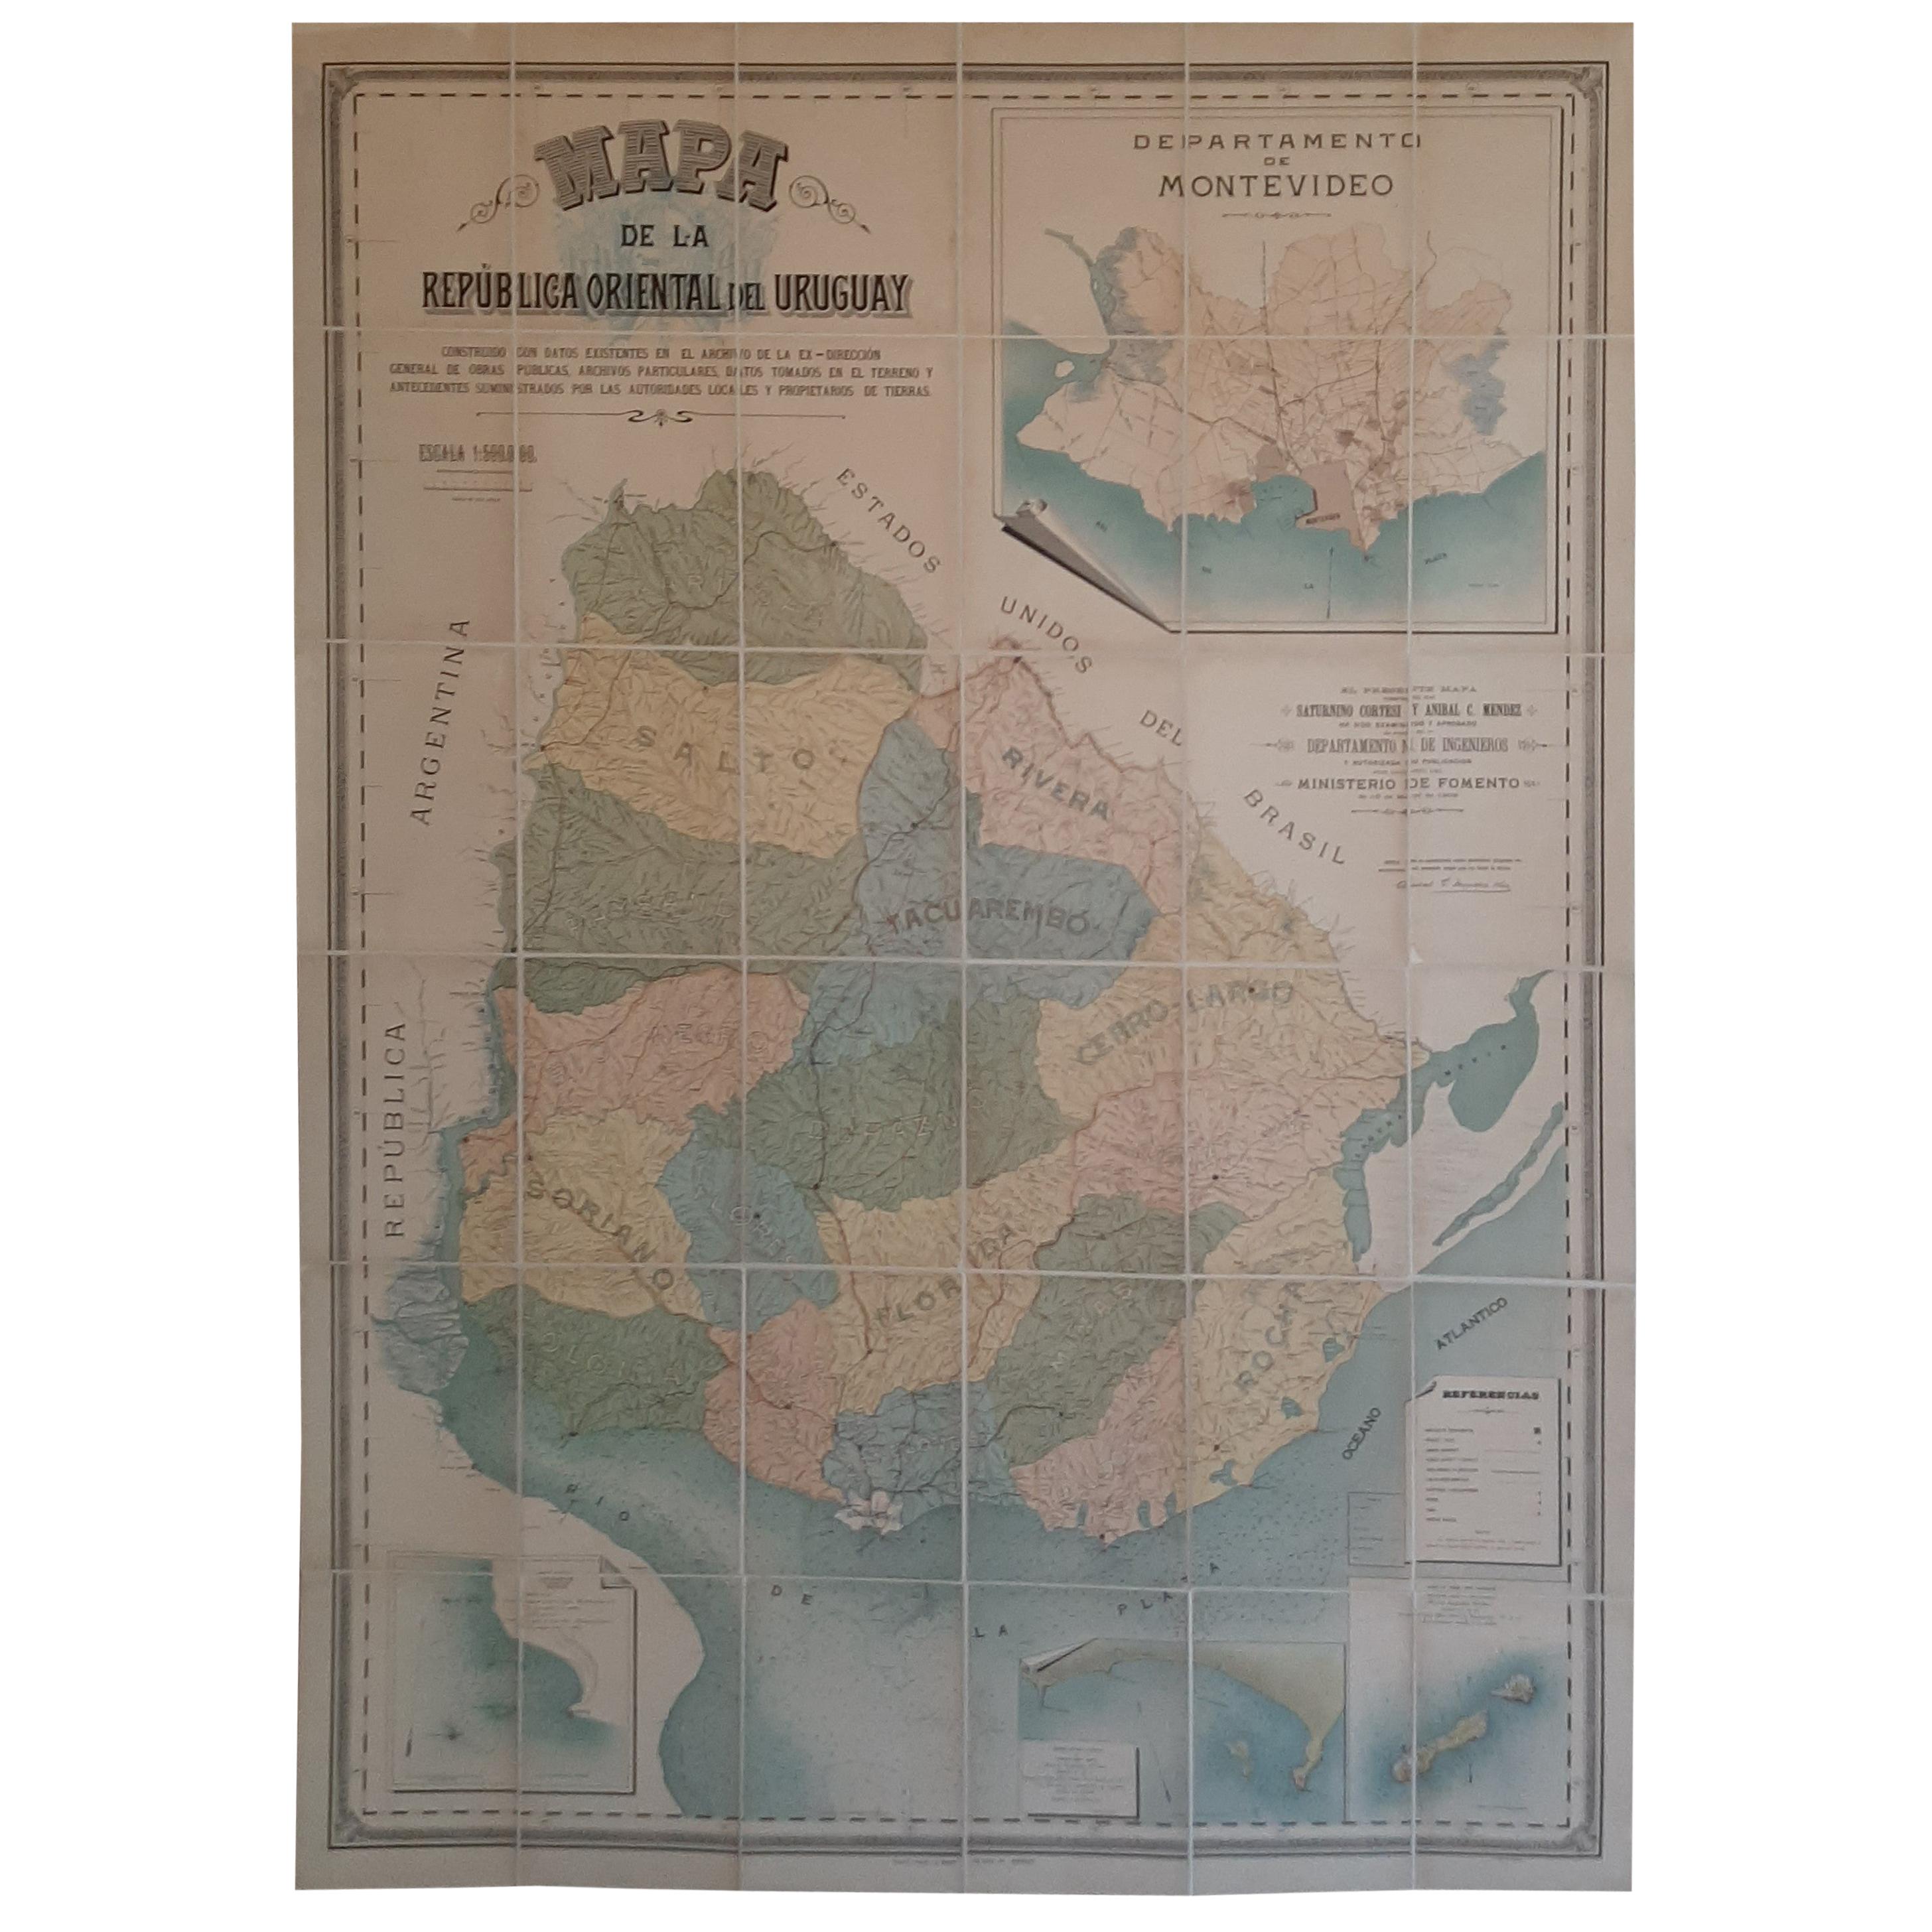 Chef-d'œuvre de Cortesi : une carte comprenante et autoritative de l' Uruguay, 1903